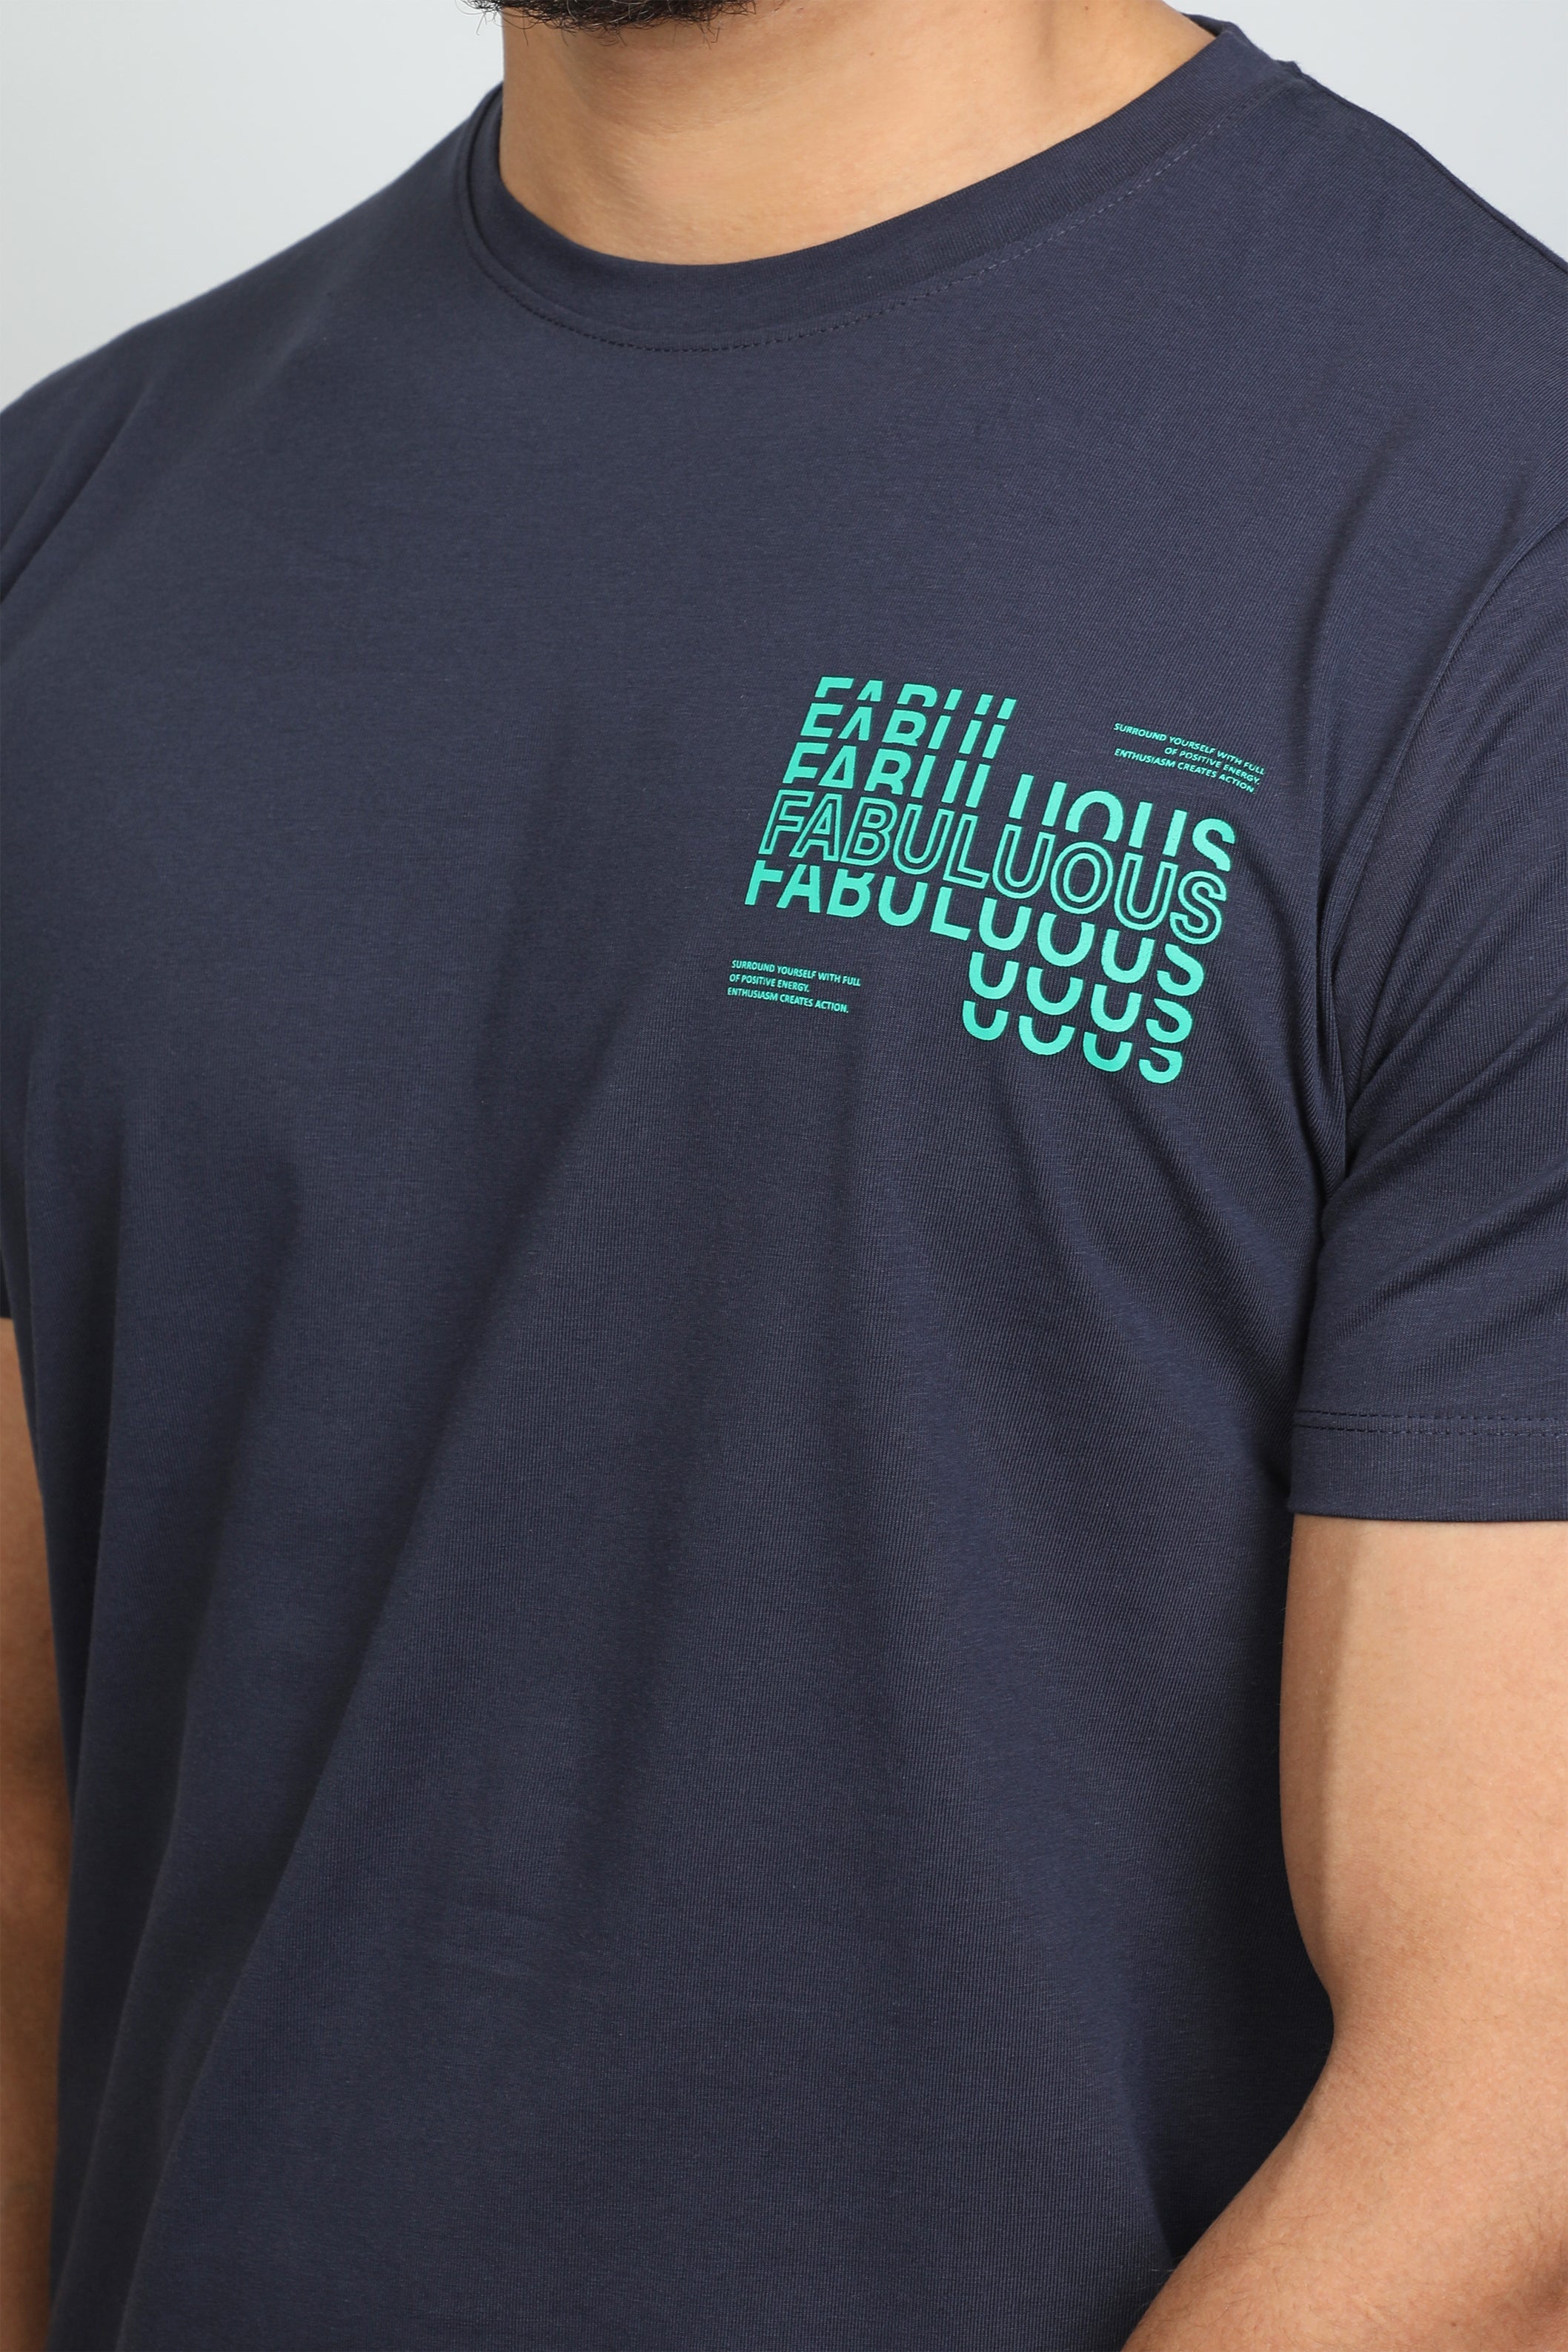 "Fabuluous" Front Designed Navy T-shirt